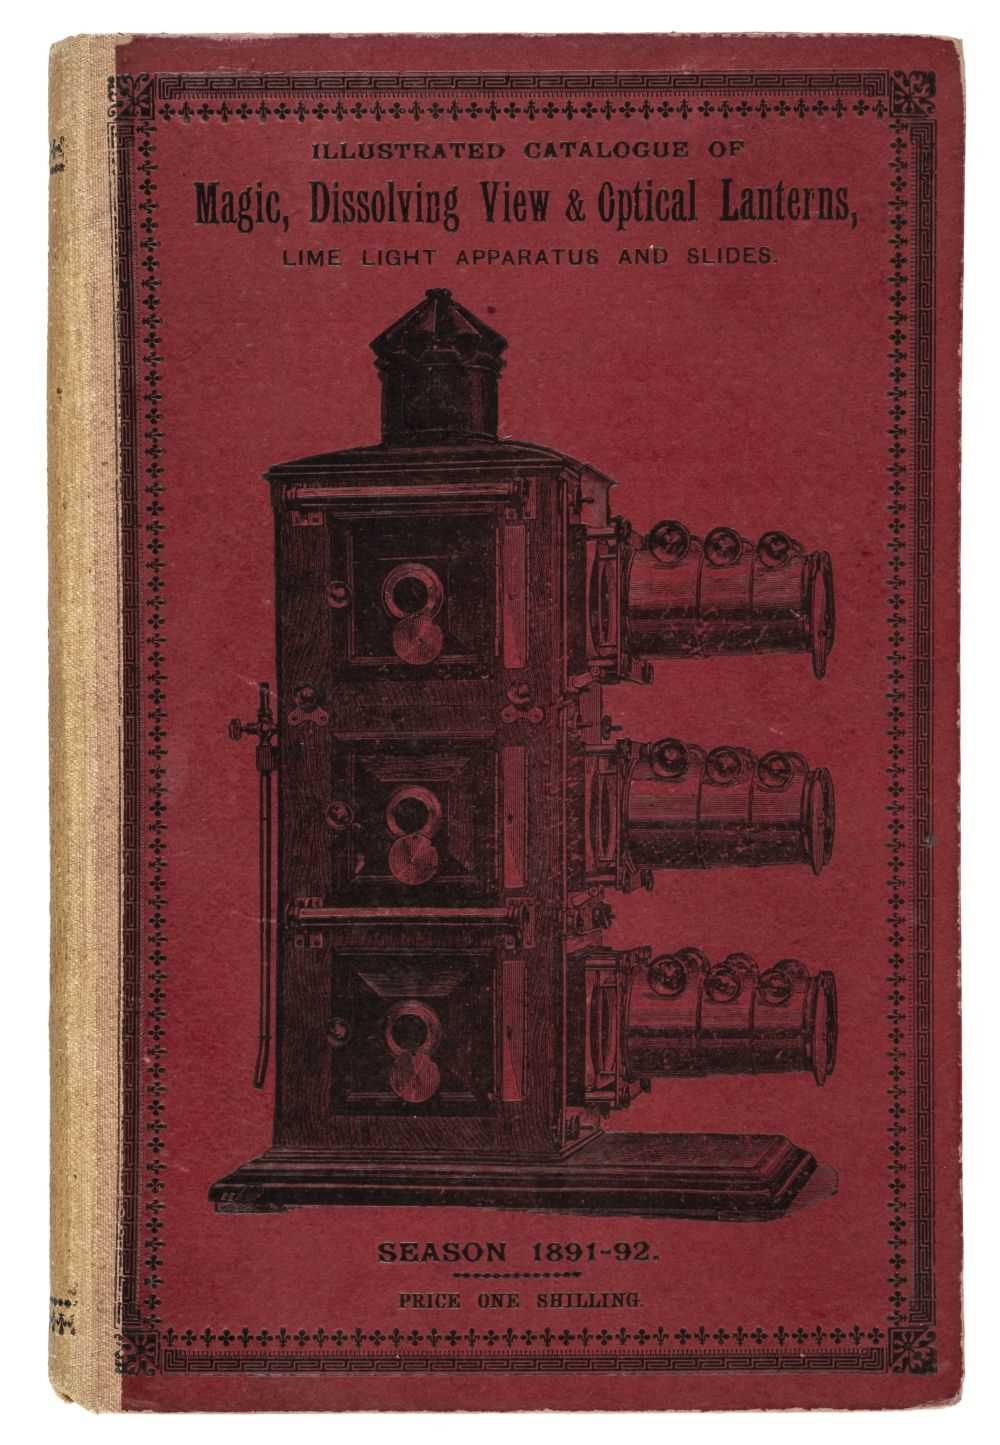 Lot 194 - Magic Lantern Catalogue. Illustrated Catalogue of Magic, Dissolving View & Optical Lanterns